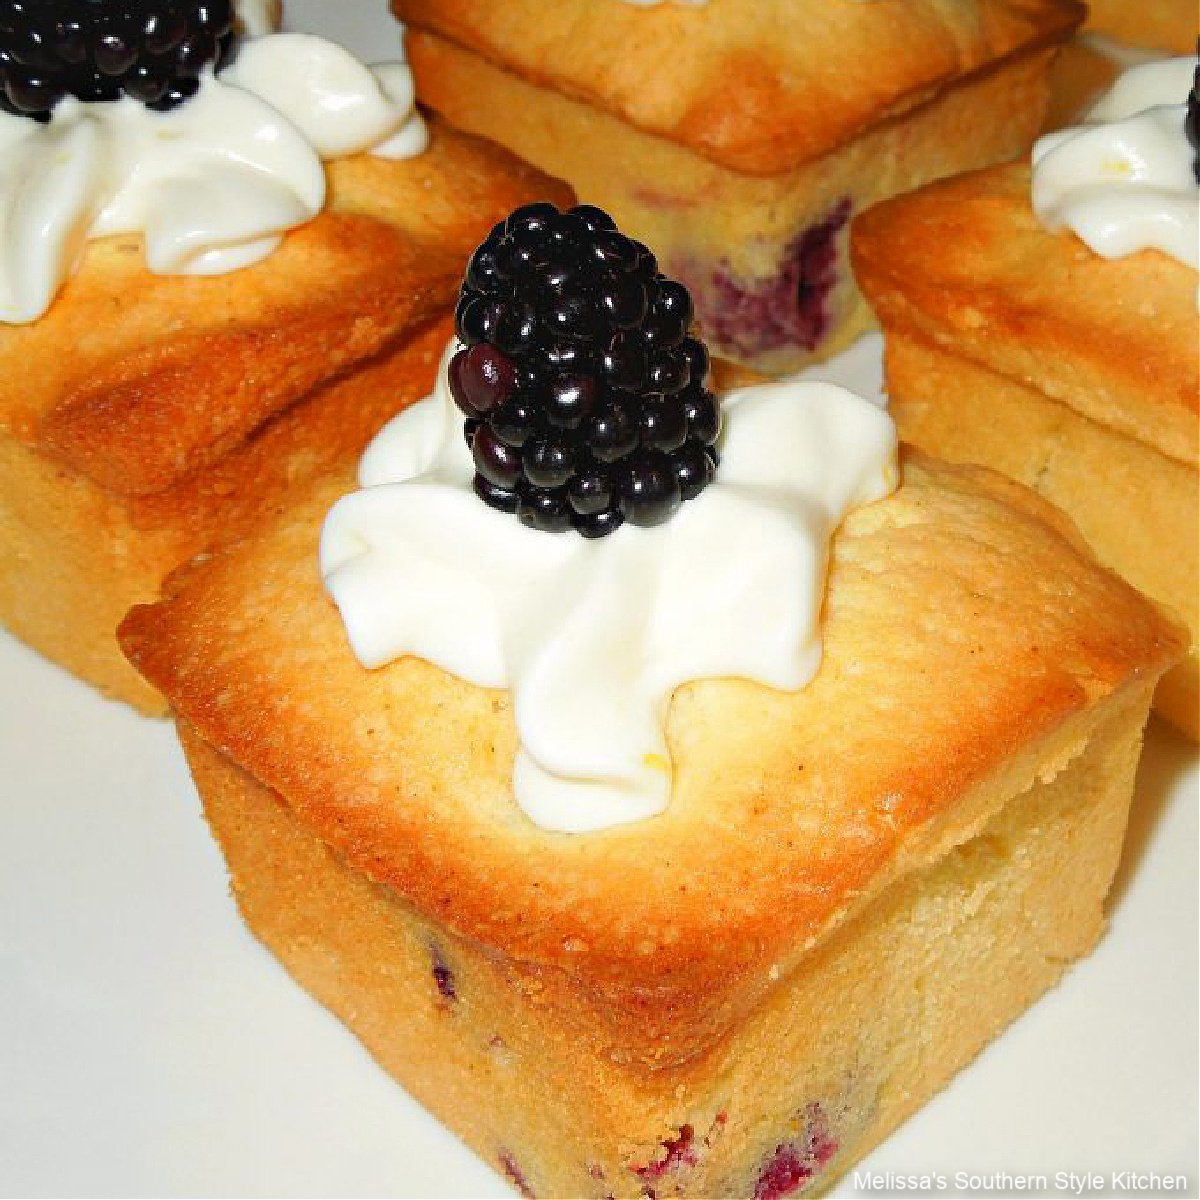 https://www.melissassouthernstylekitchen.com/wp-content/uploads/2012/04/Blackberries-and-Cream-Mini-Pound-Cakes-1.jpg